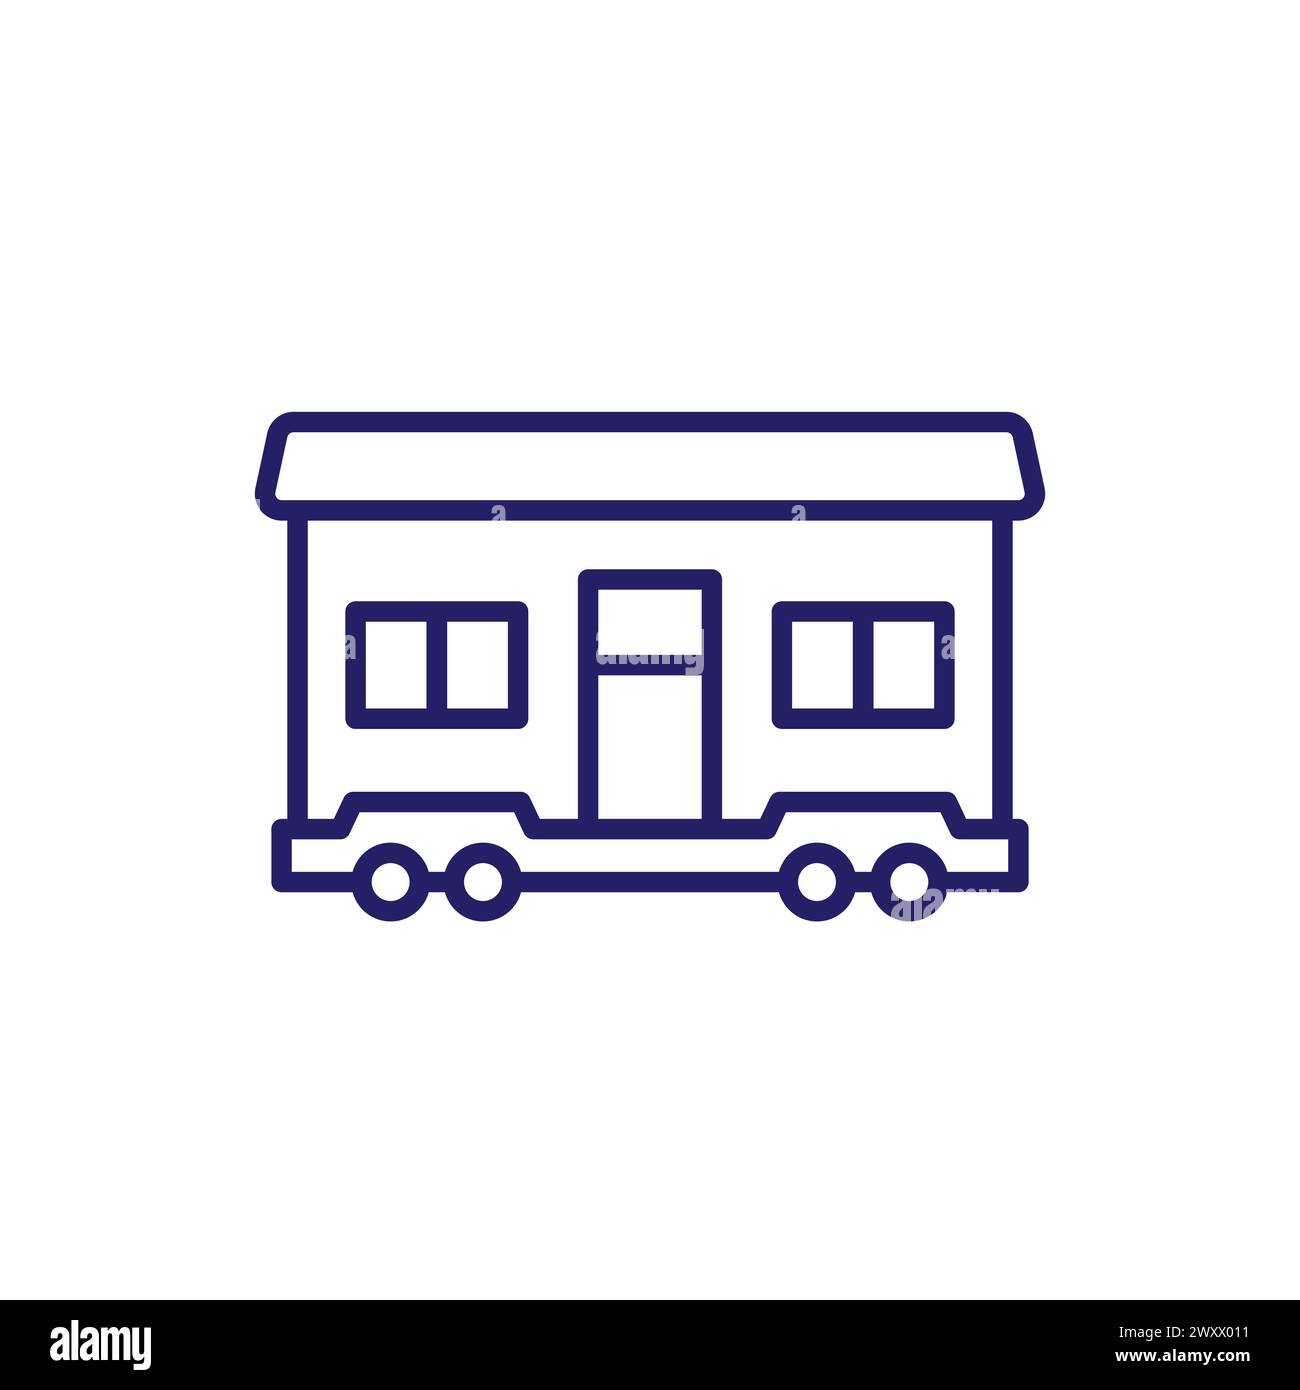 mobile home icon, house trailer line vector Stock Vector